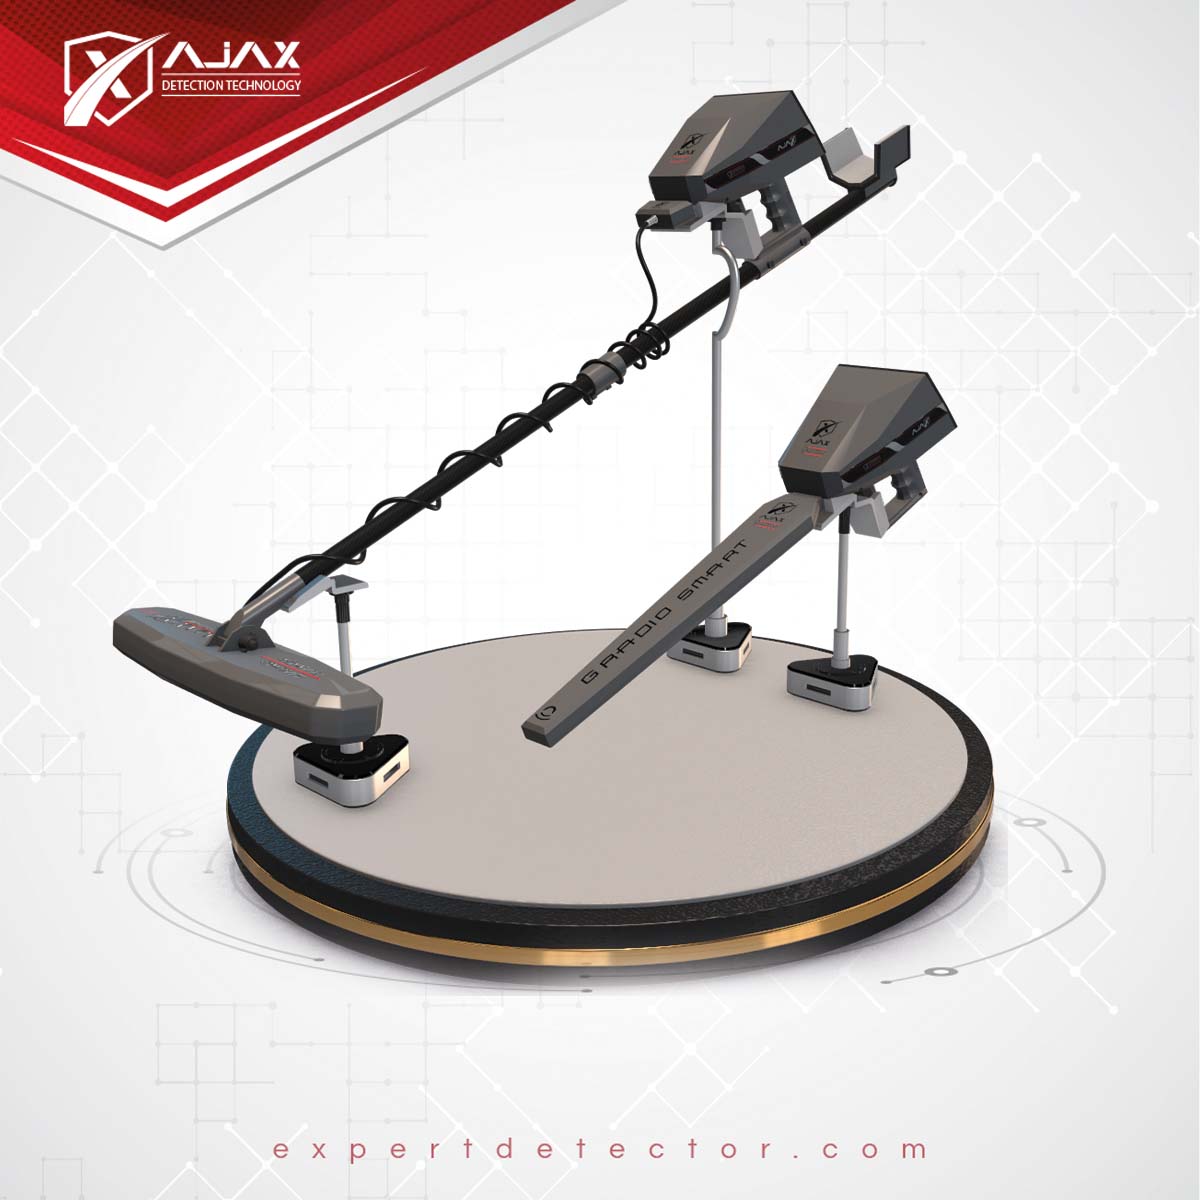 Ajax gamma metal detector